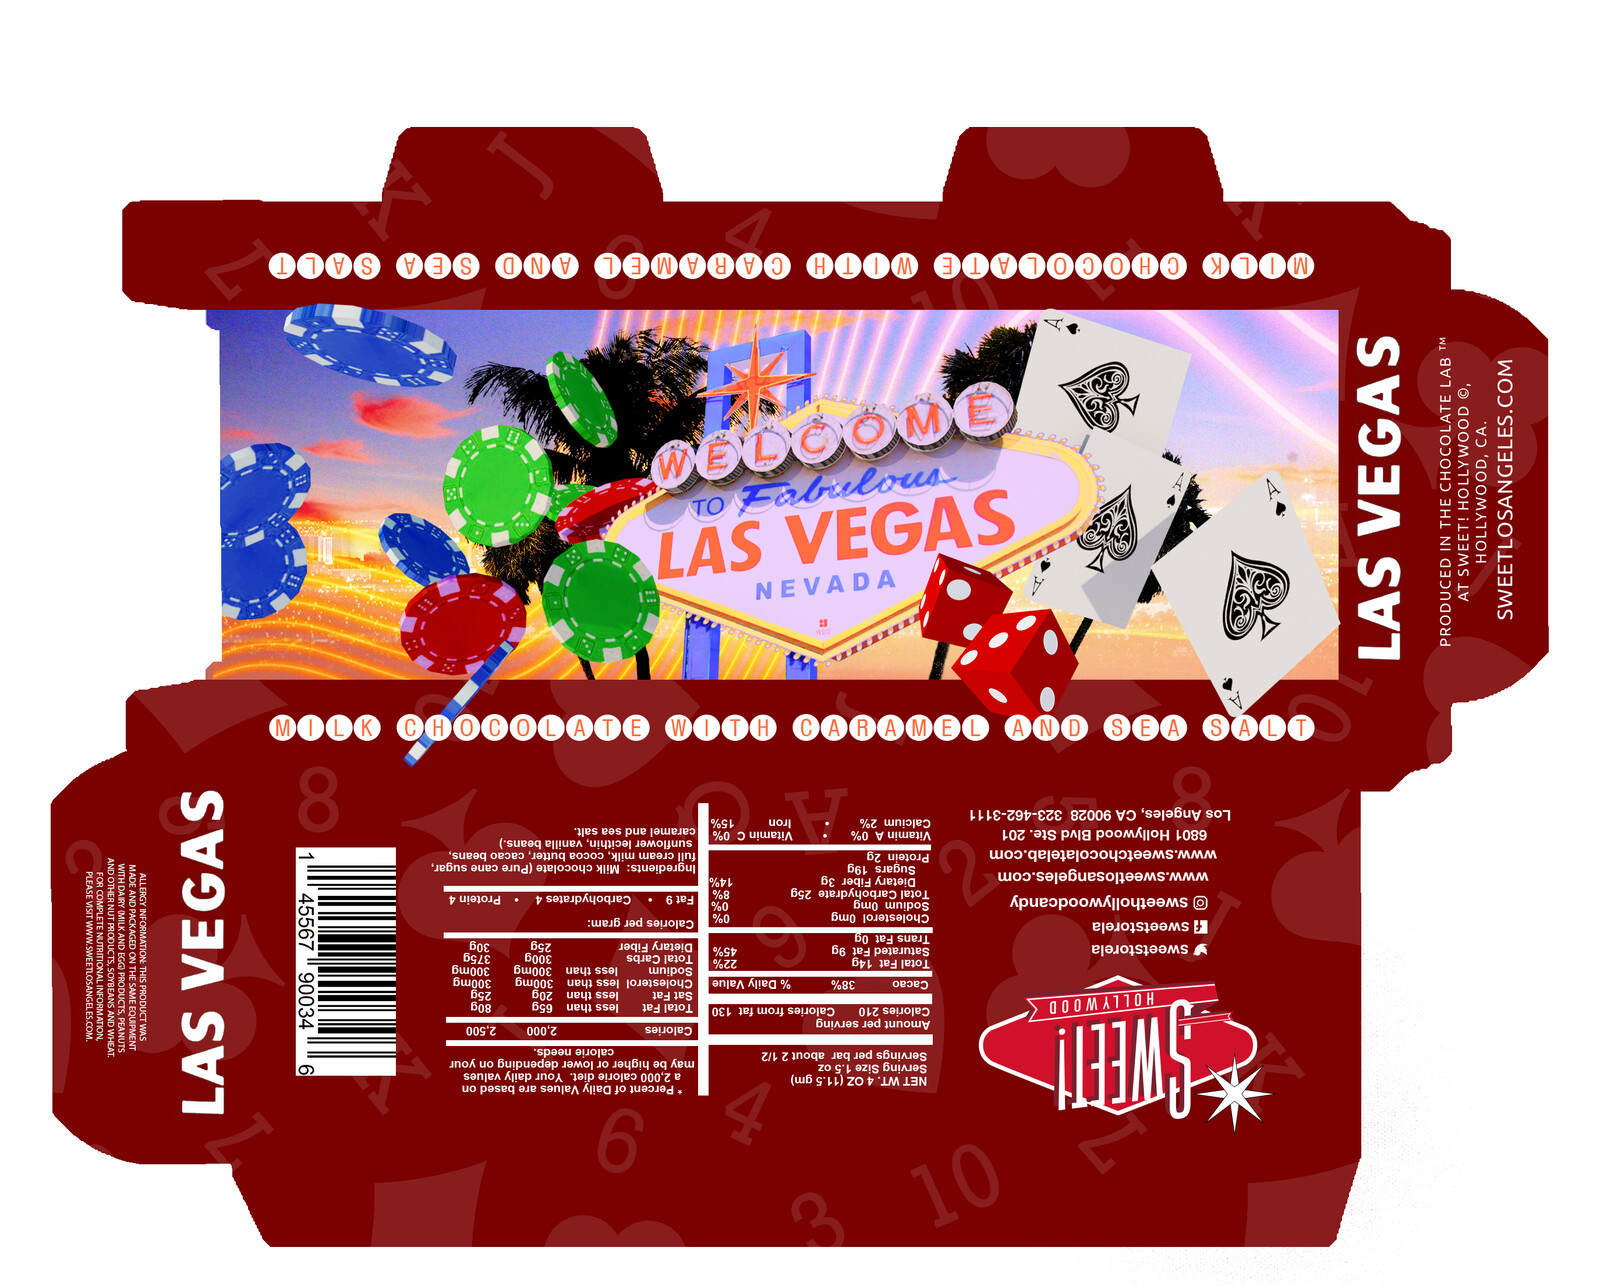 Las Vegas Chocolate bar box design